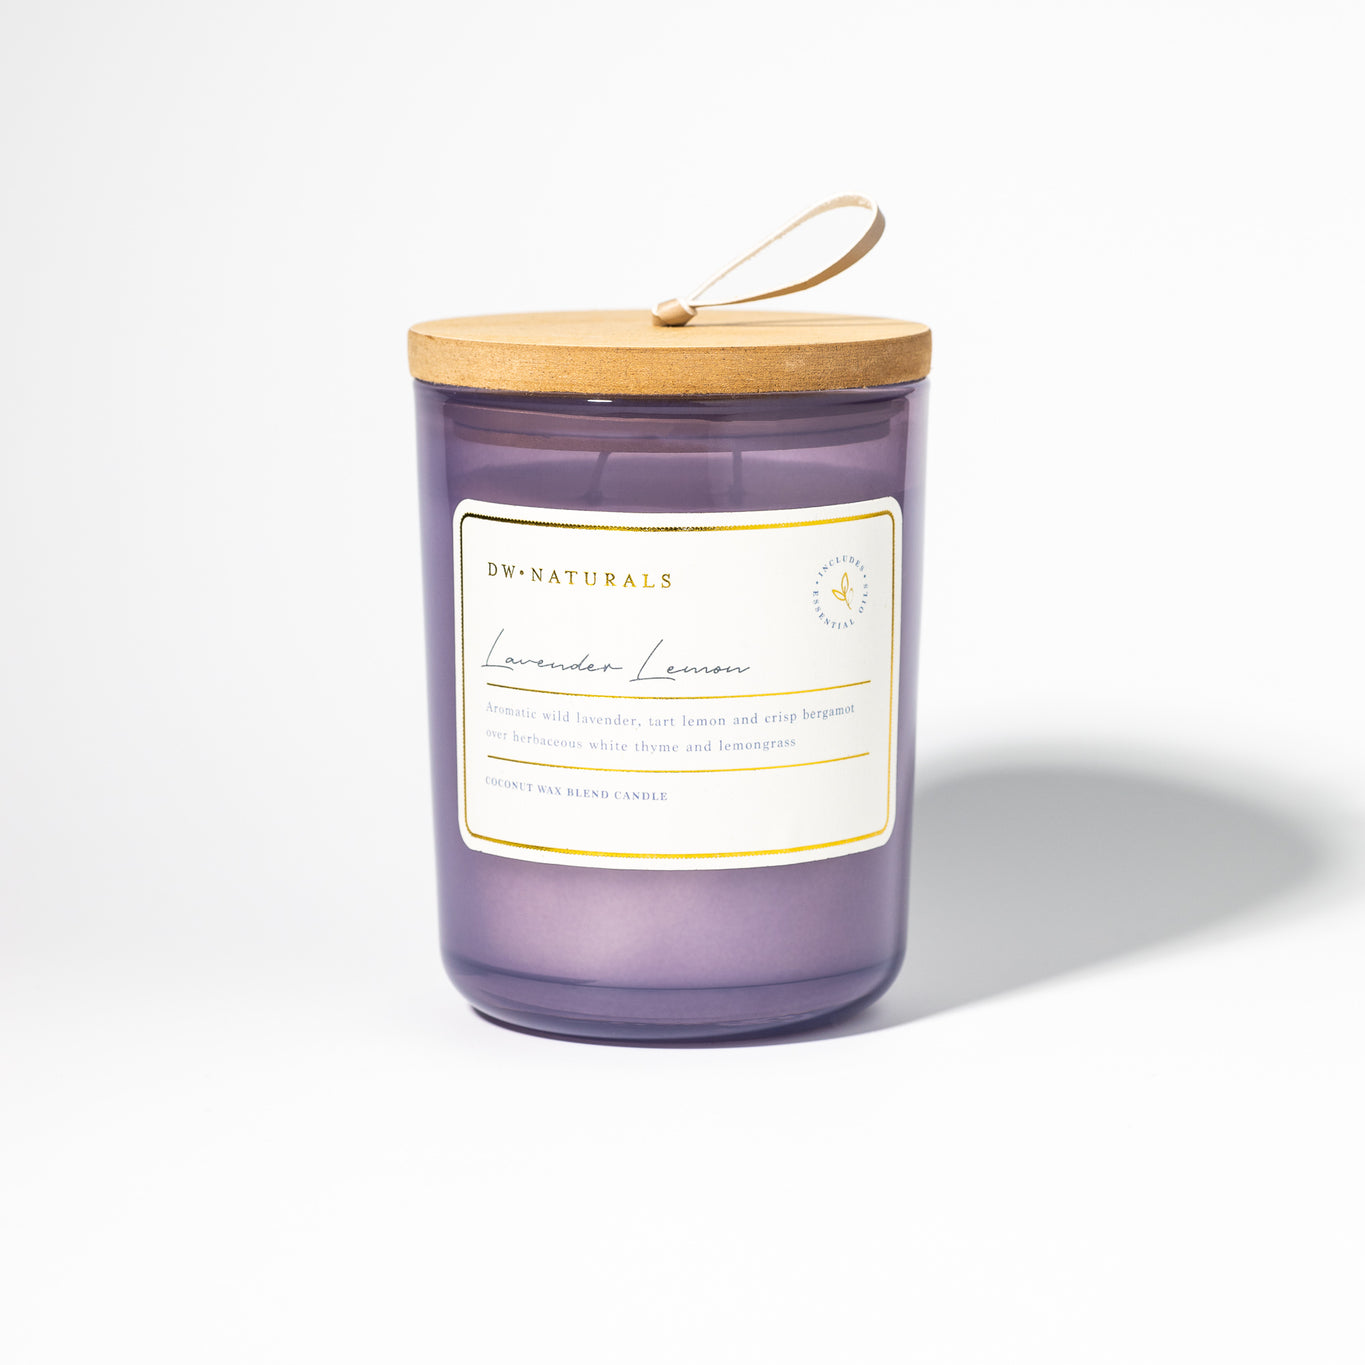 DW Naturals Lavender Lemon kvapioji žvakė